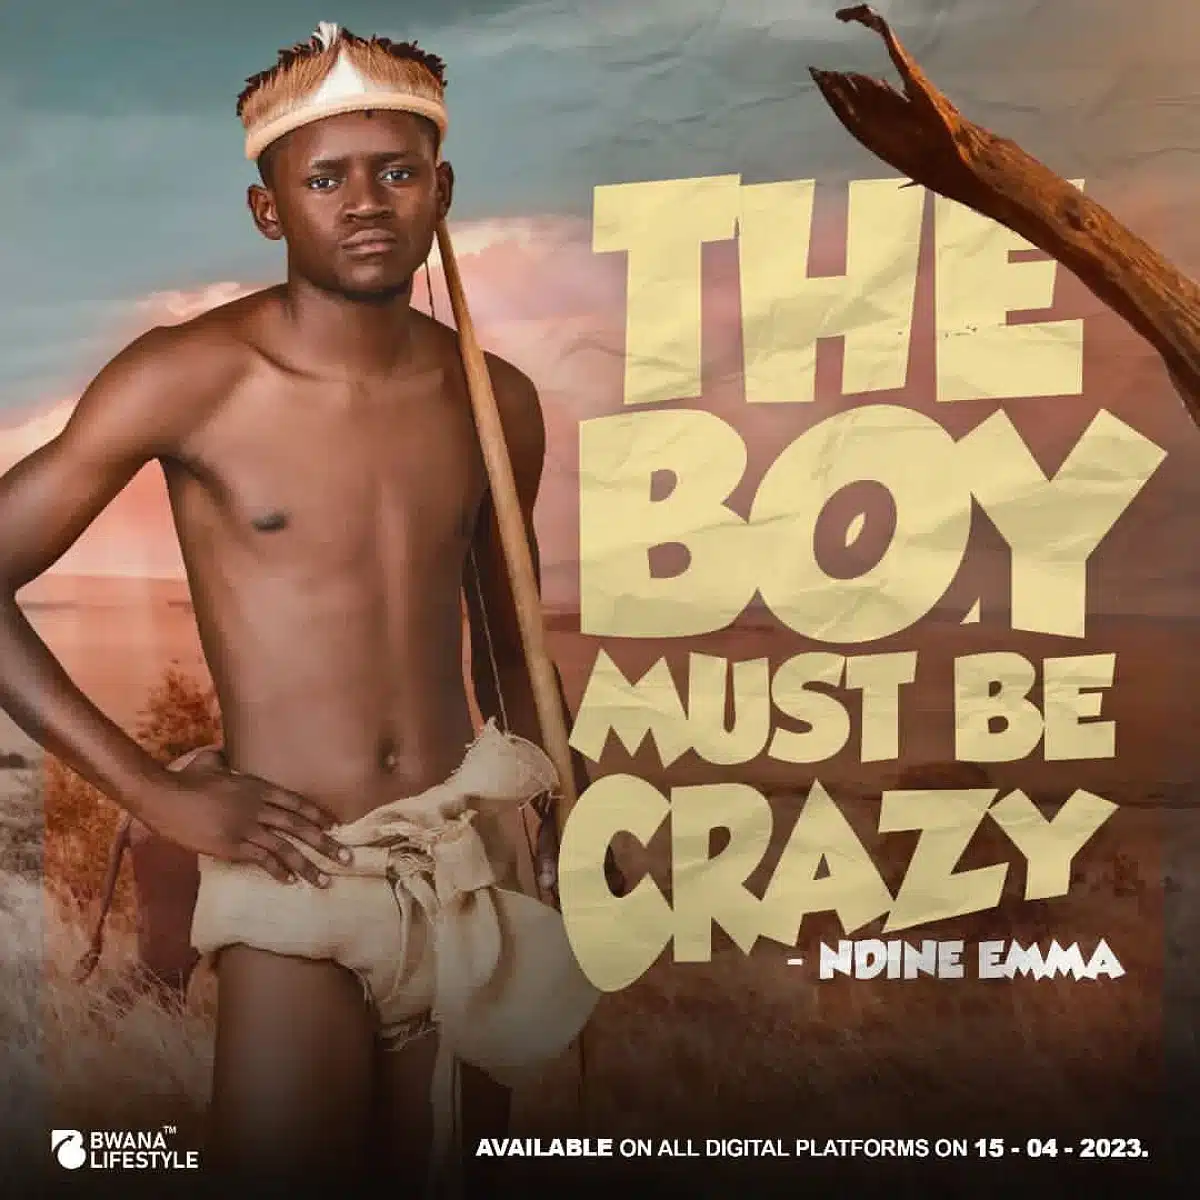 DOWNLOAD ALBUM: Ndine Emma  – “The Boy Must Be Crazy” | Full Album